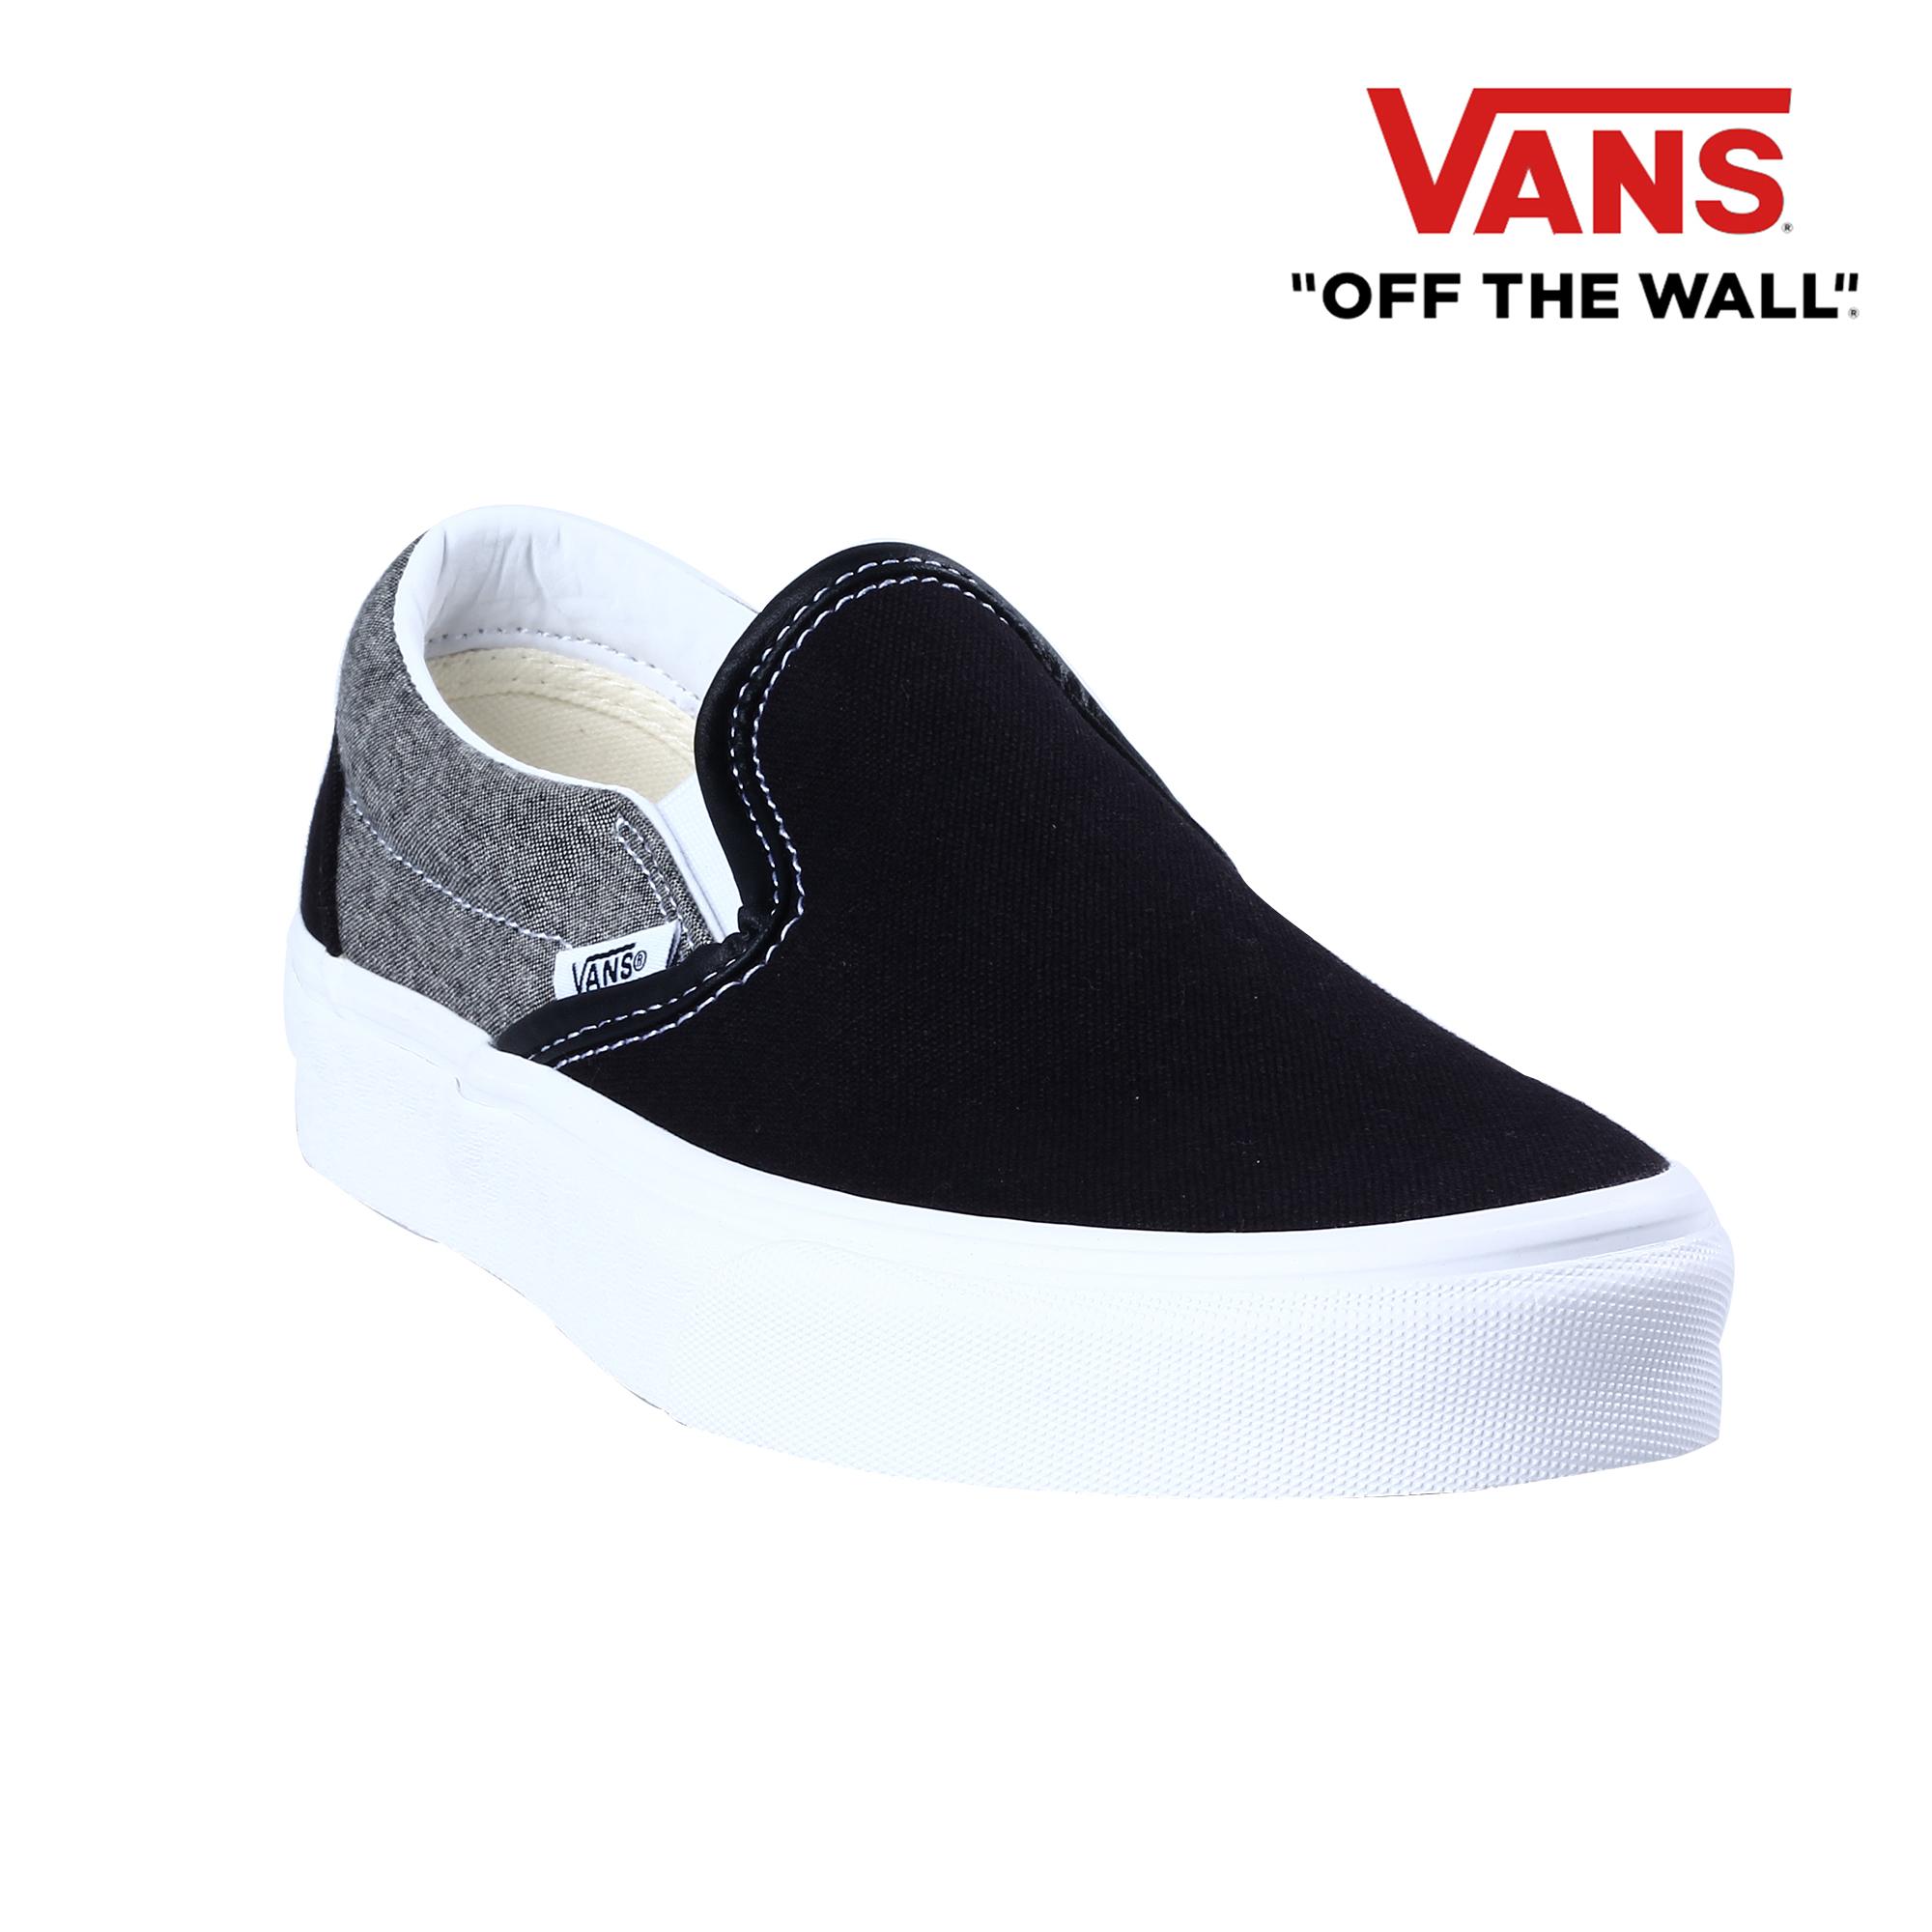 vans classic slip on unisex adults low top sneakers